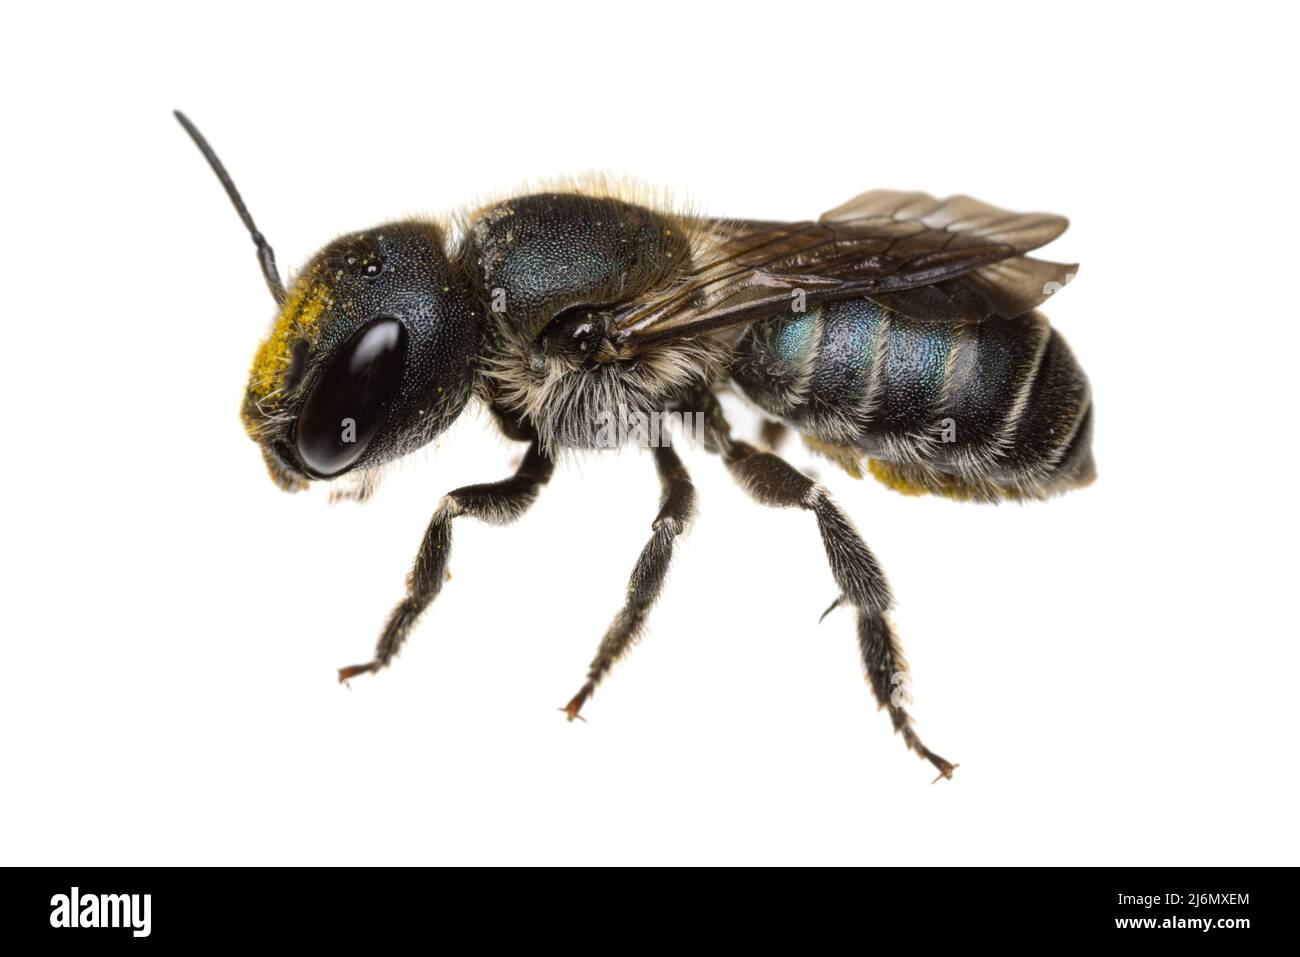 Insectos de europa - abejas: Macro vista lateral de la hembra Osmia caerulescens abeja de albañil azul (alemán Stahlblaue Mauerbiene) aislado sobre fondo blanco wi Foto de stock